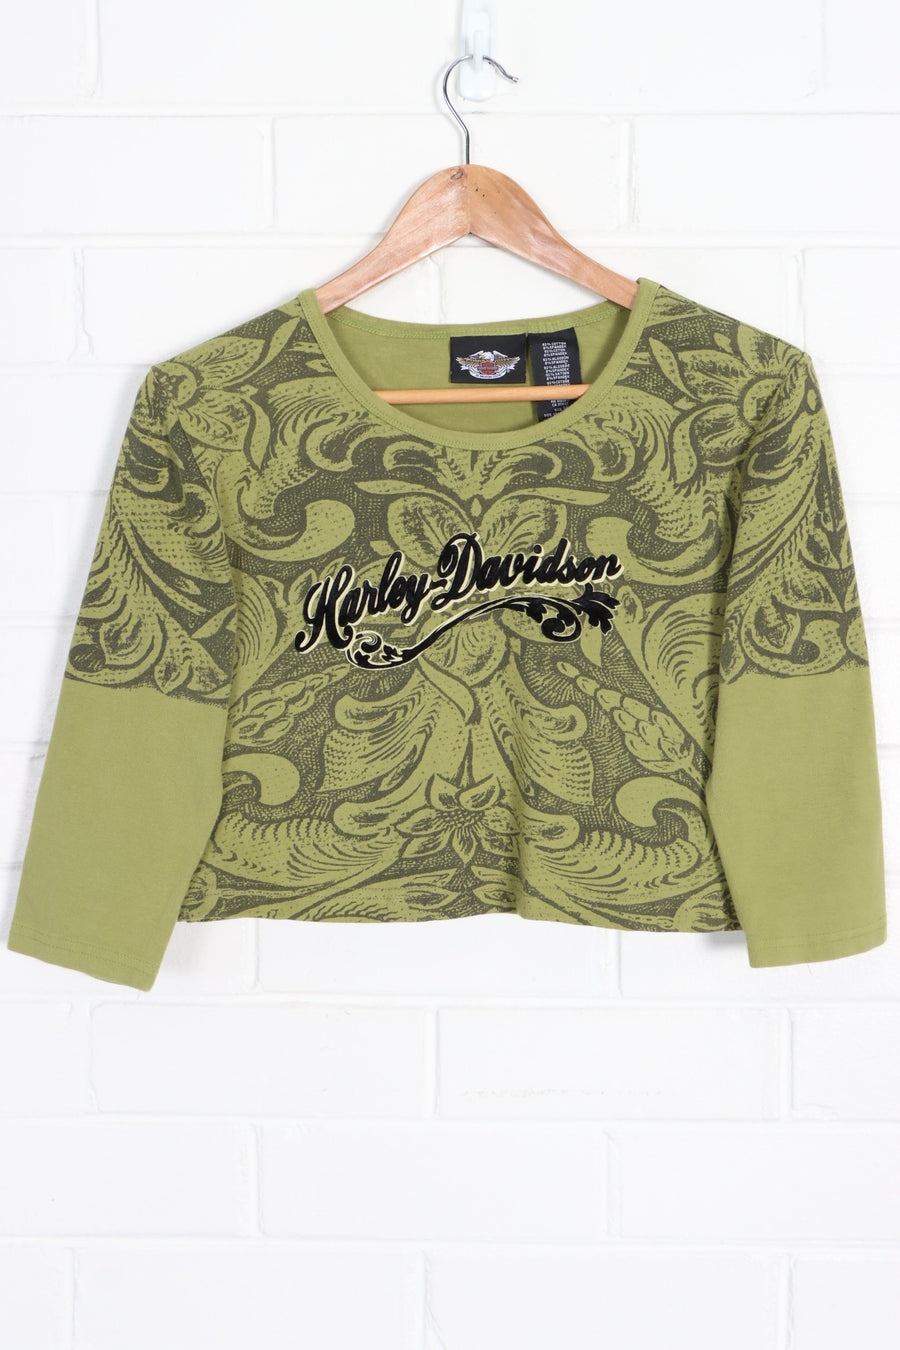 Olive Green HARLEY DAVIDSON Velvet Logo 3/4 Sleeve Crop Top (Women's M)